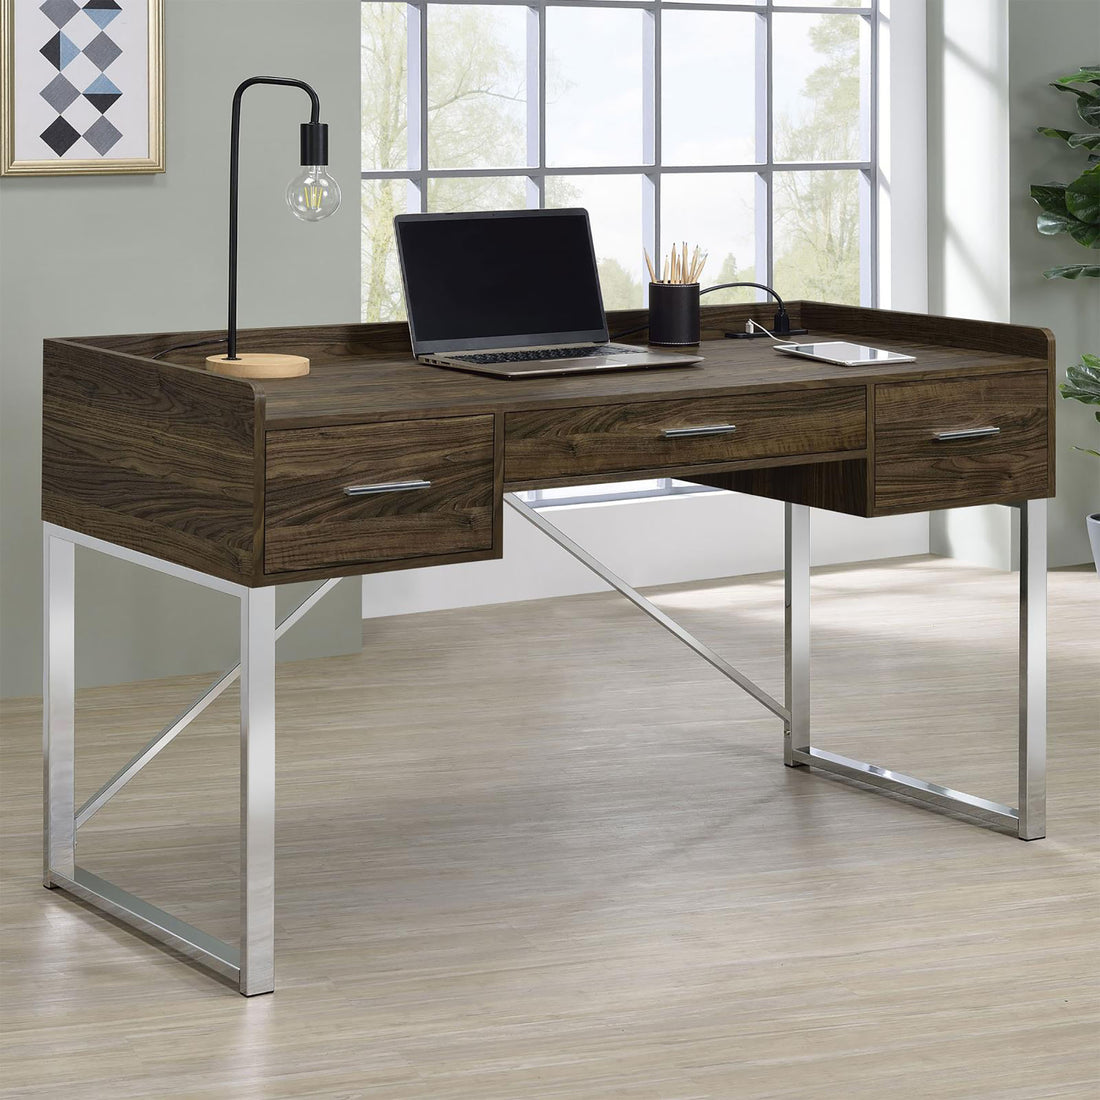 Walnut and Chrome 3 Drawer Writing Desk